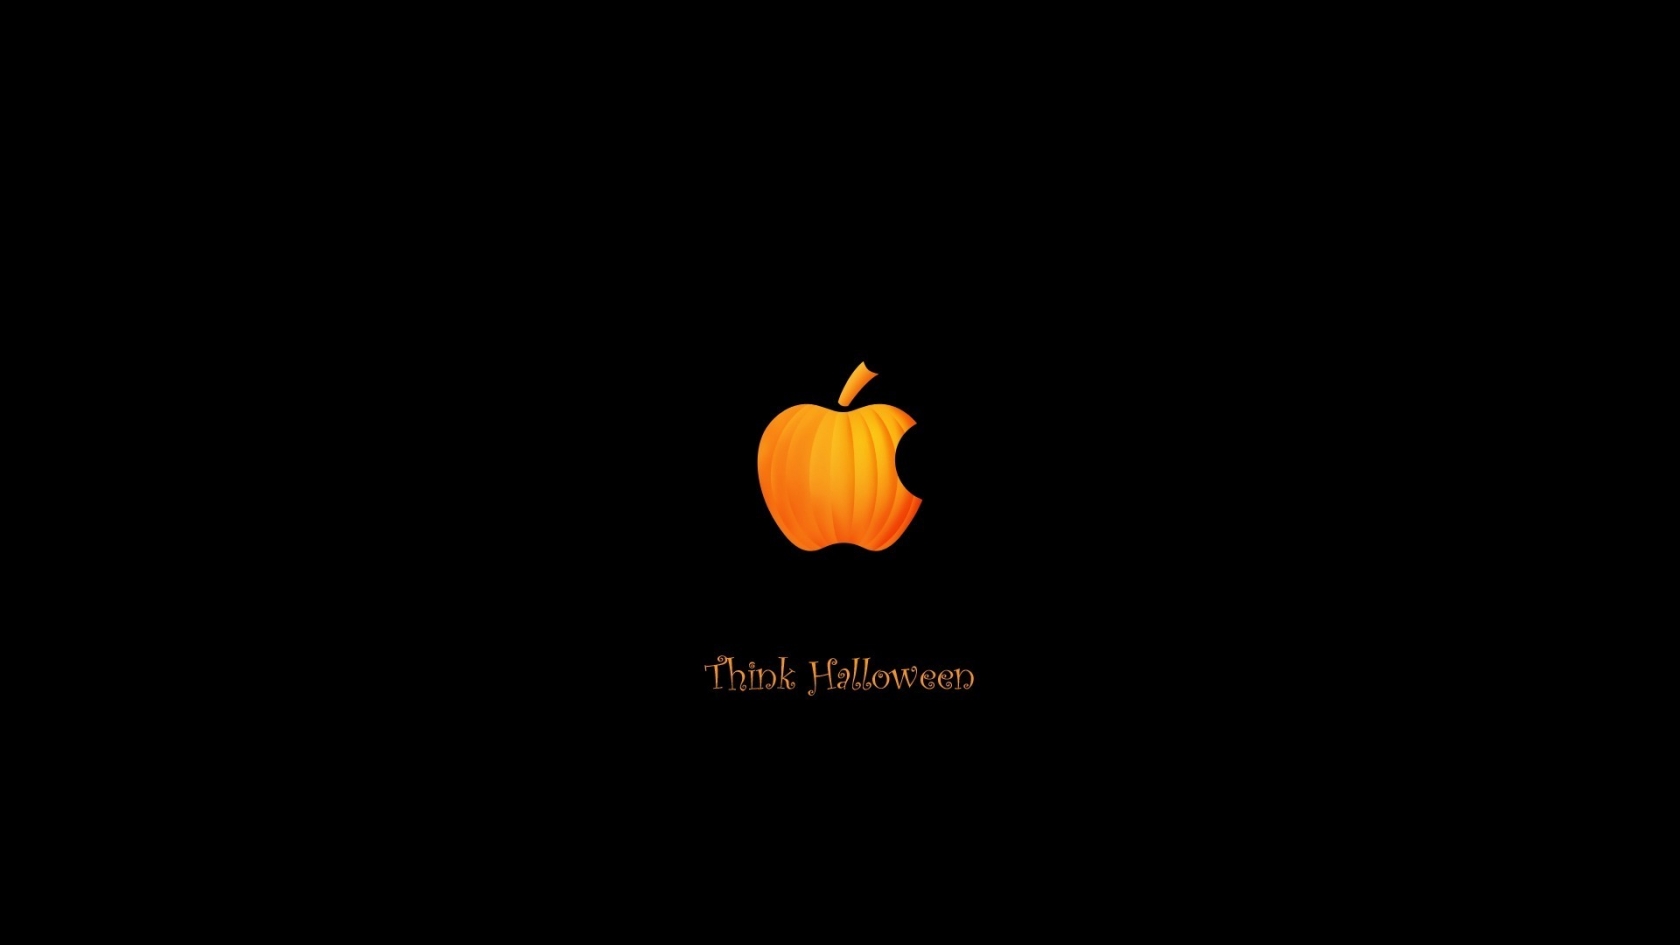 Pumpkin Apple for 1680 x 945 HDTV resolution